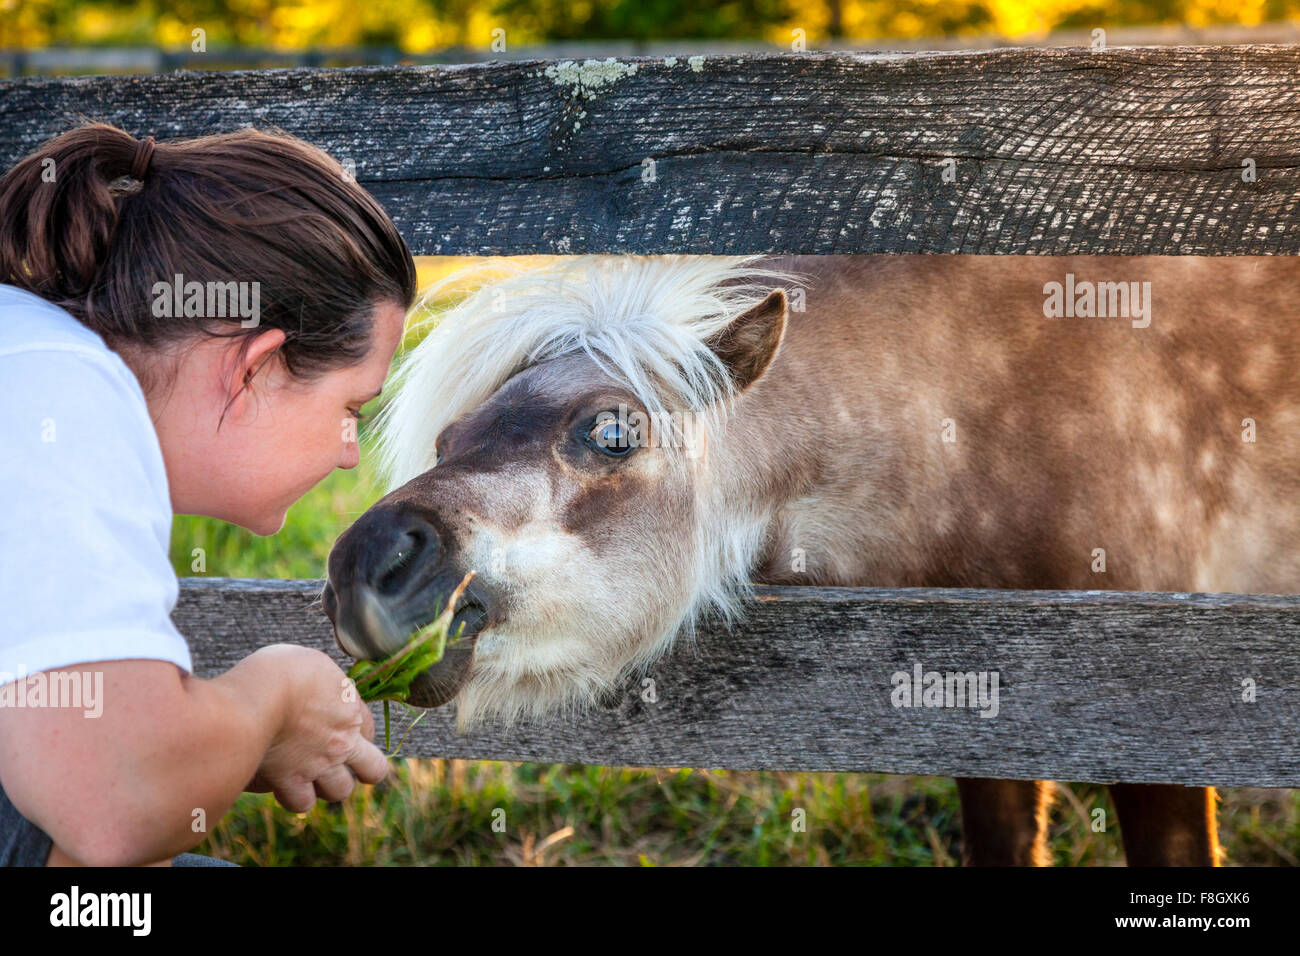 Feeding shetland pony -Fotos und -Bildmaterial in hoher Auflösung – Alamy